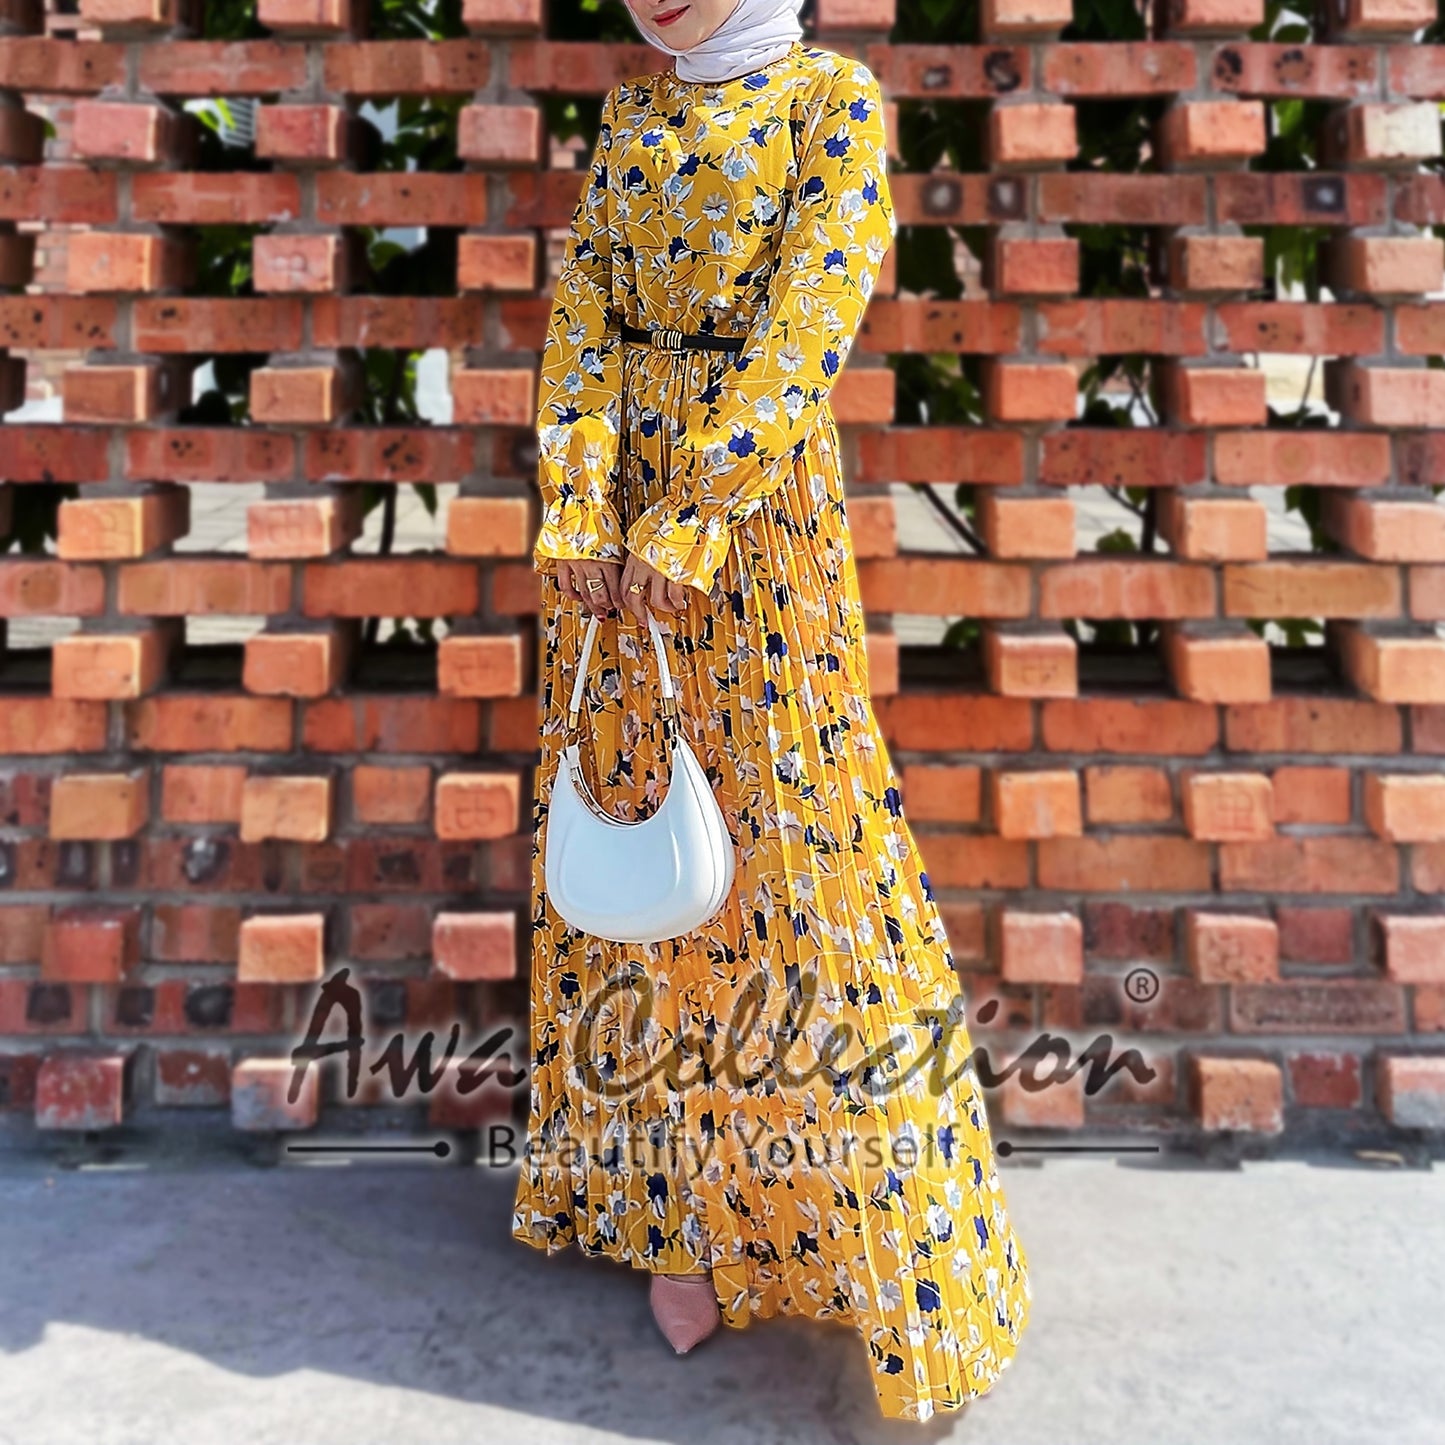 LALEESA Awa Collection DA126153 DRESS RAEESA Dress Muslimah Dress Women Dress Baju Raya 2024